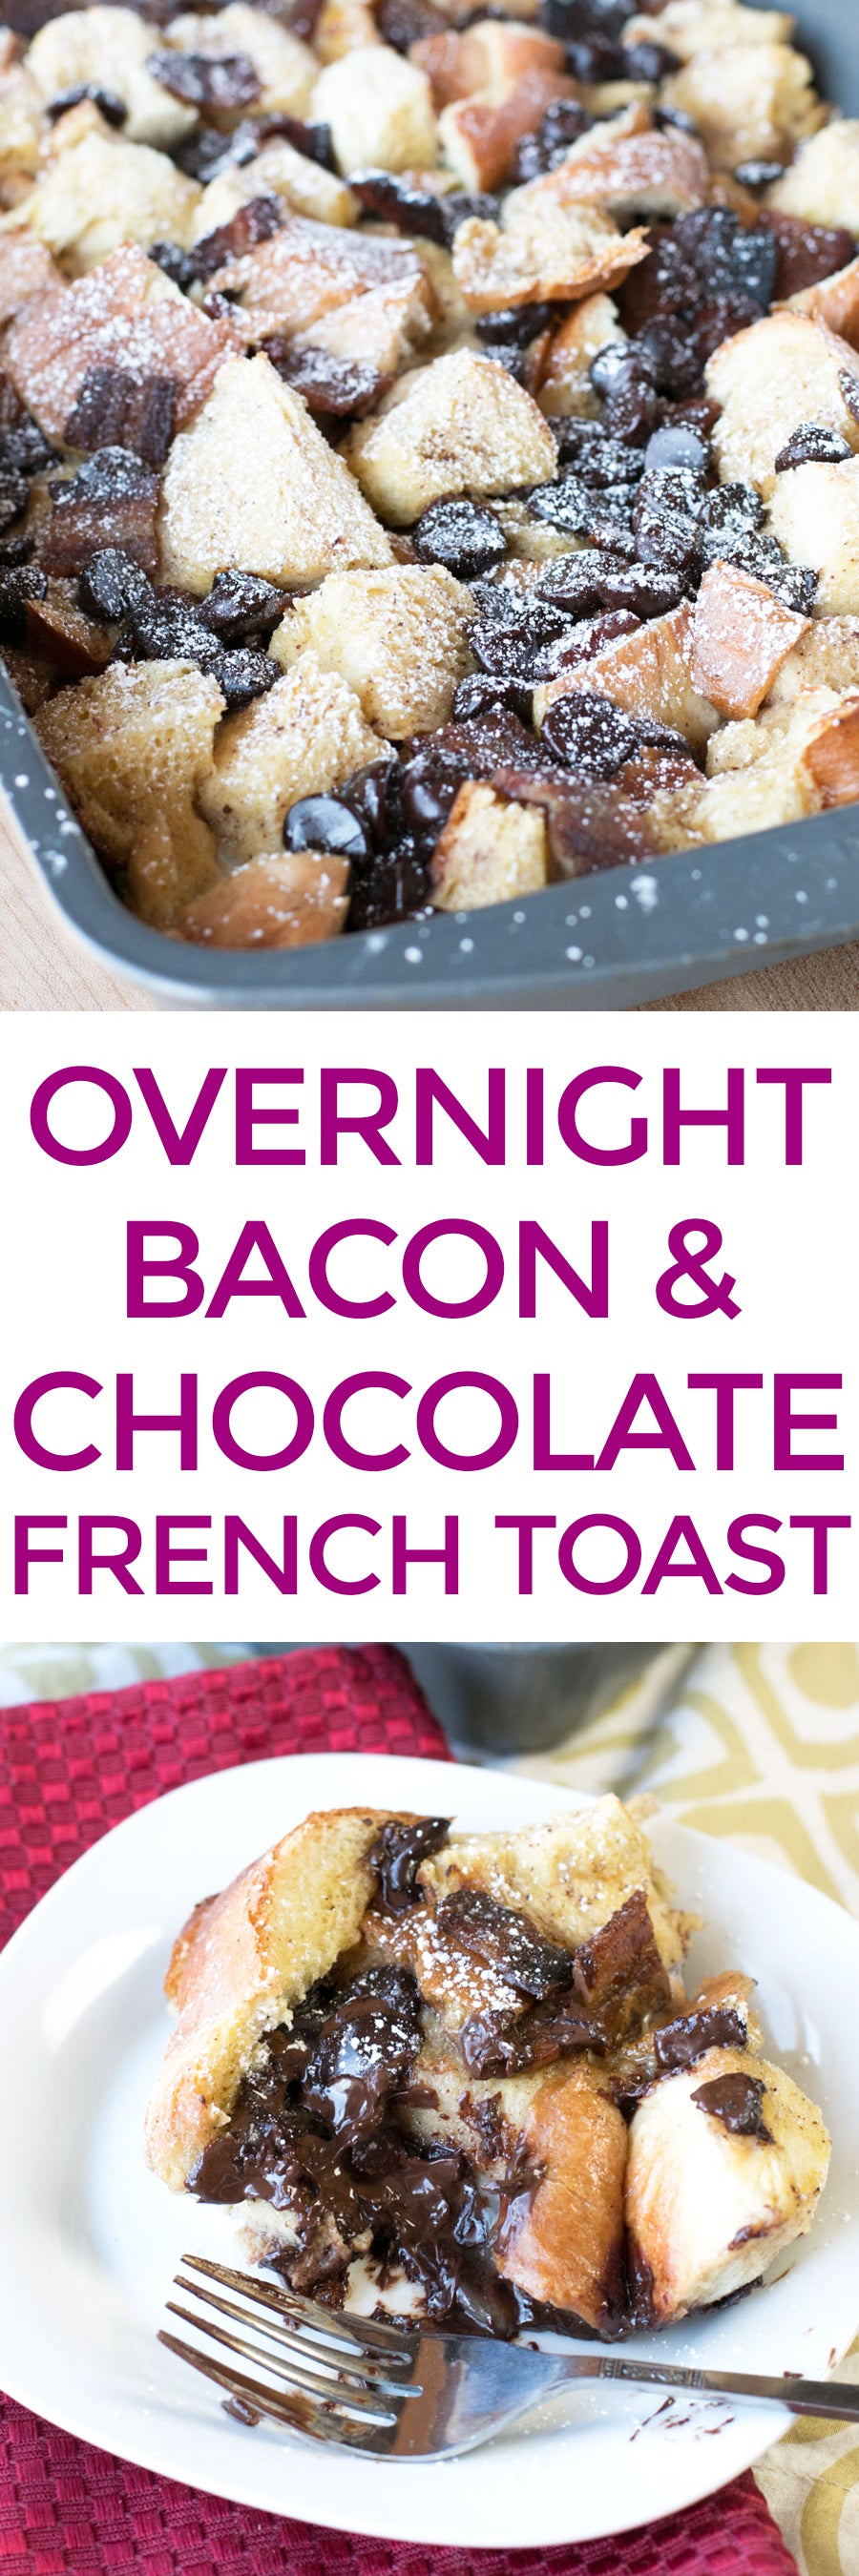 Overnight Bacon & Chocolate French Toast | pigofthemonth.com #bacon #breakfast #brunch #frenchtoast